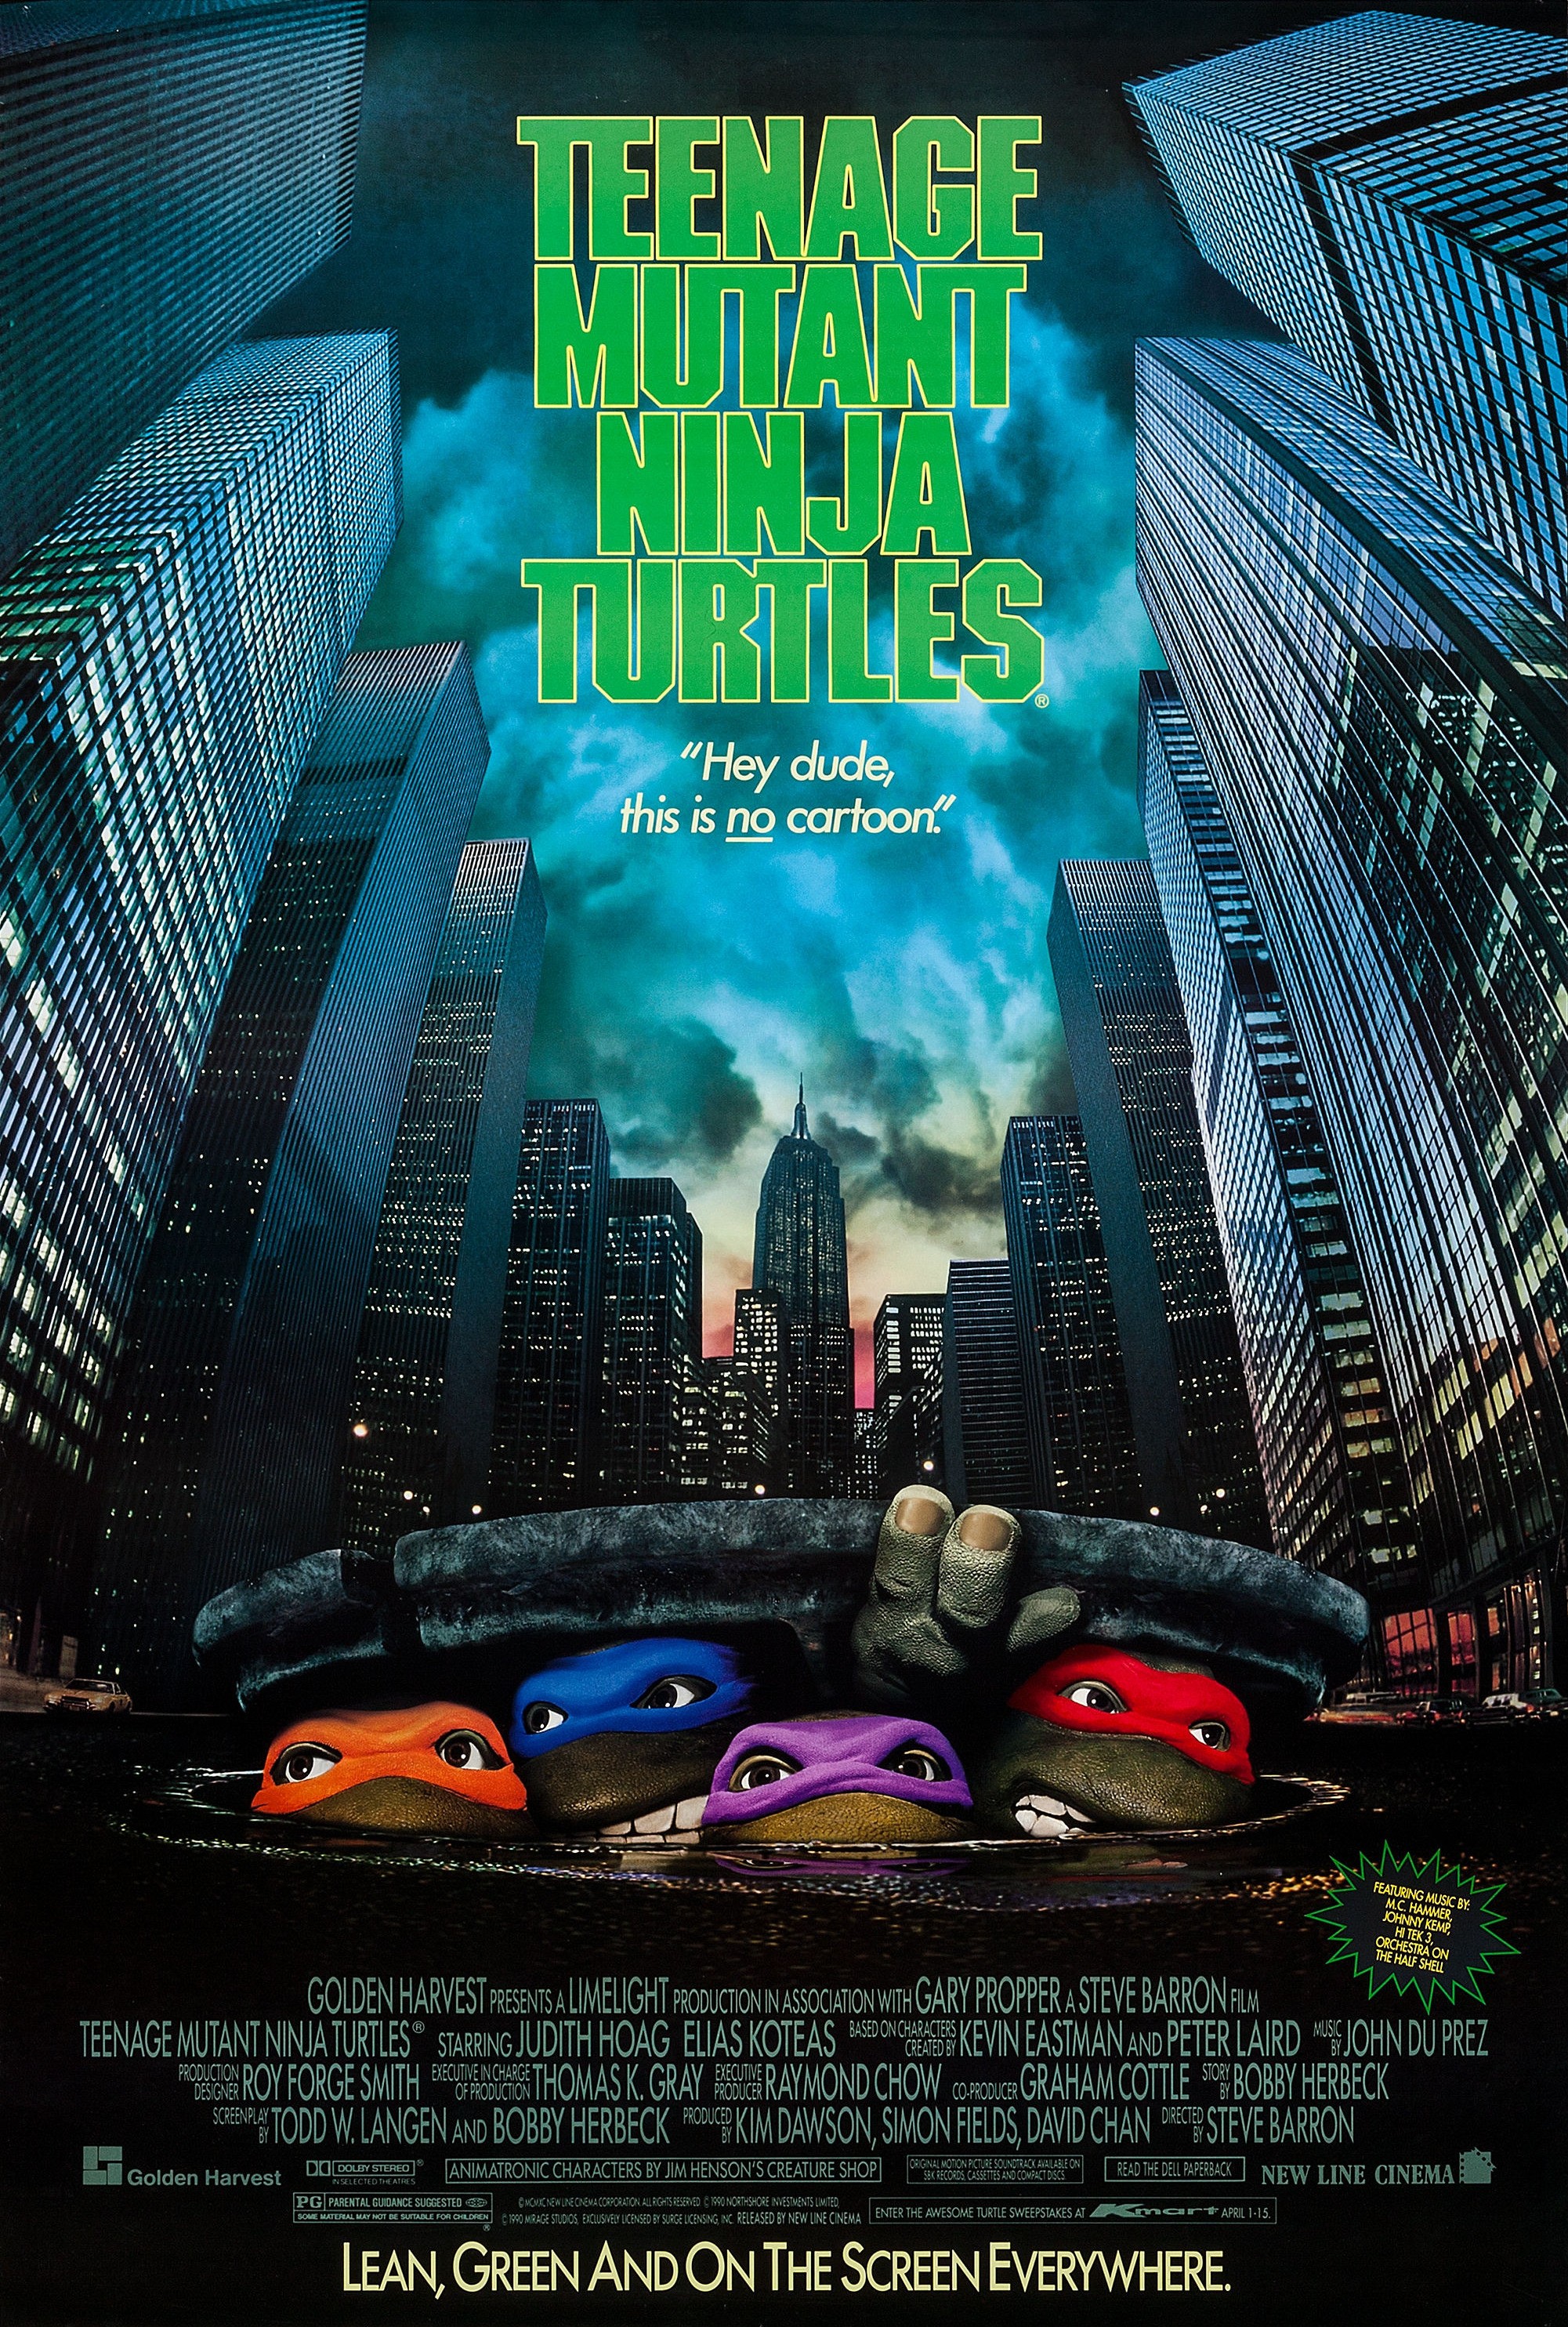 Teenage Mutant Ninja Turtles Enter the Rat King (TV Episode 1989) - IMDb